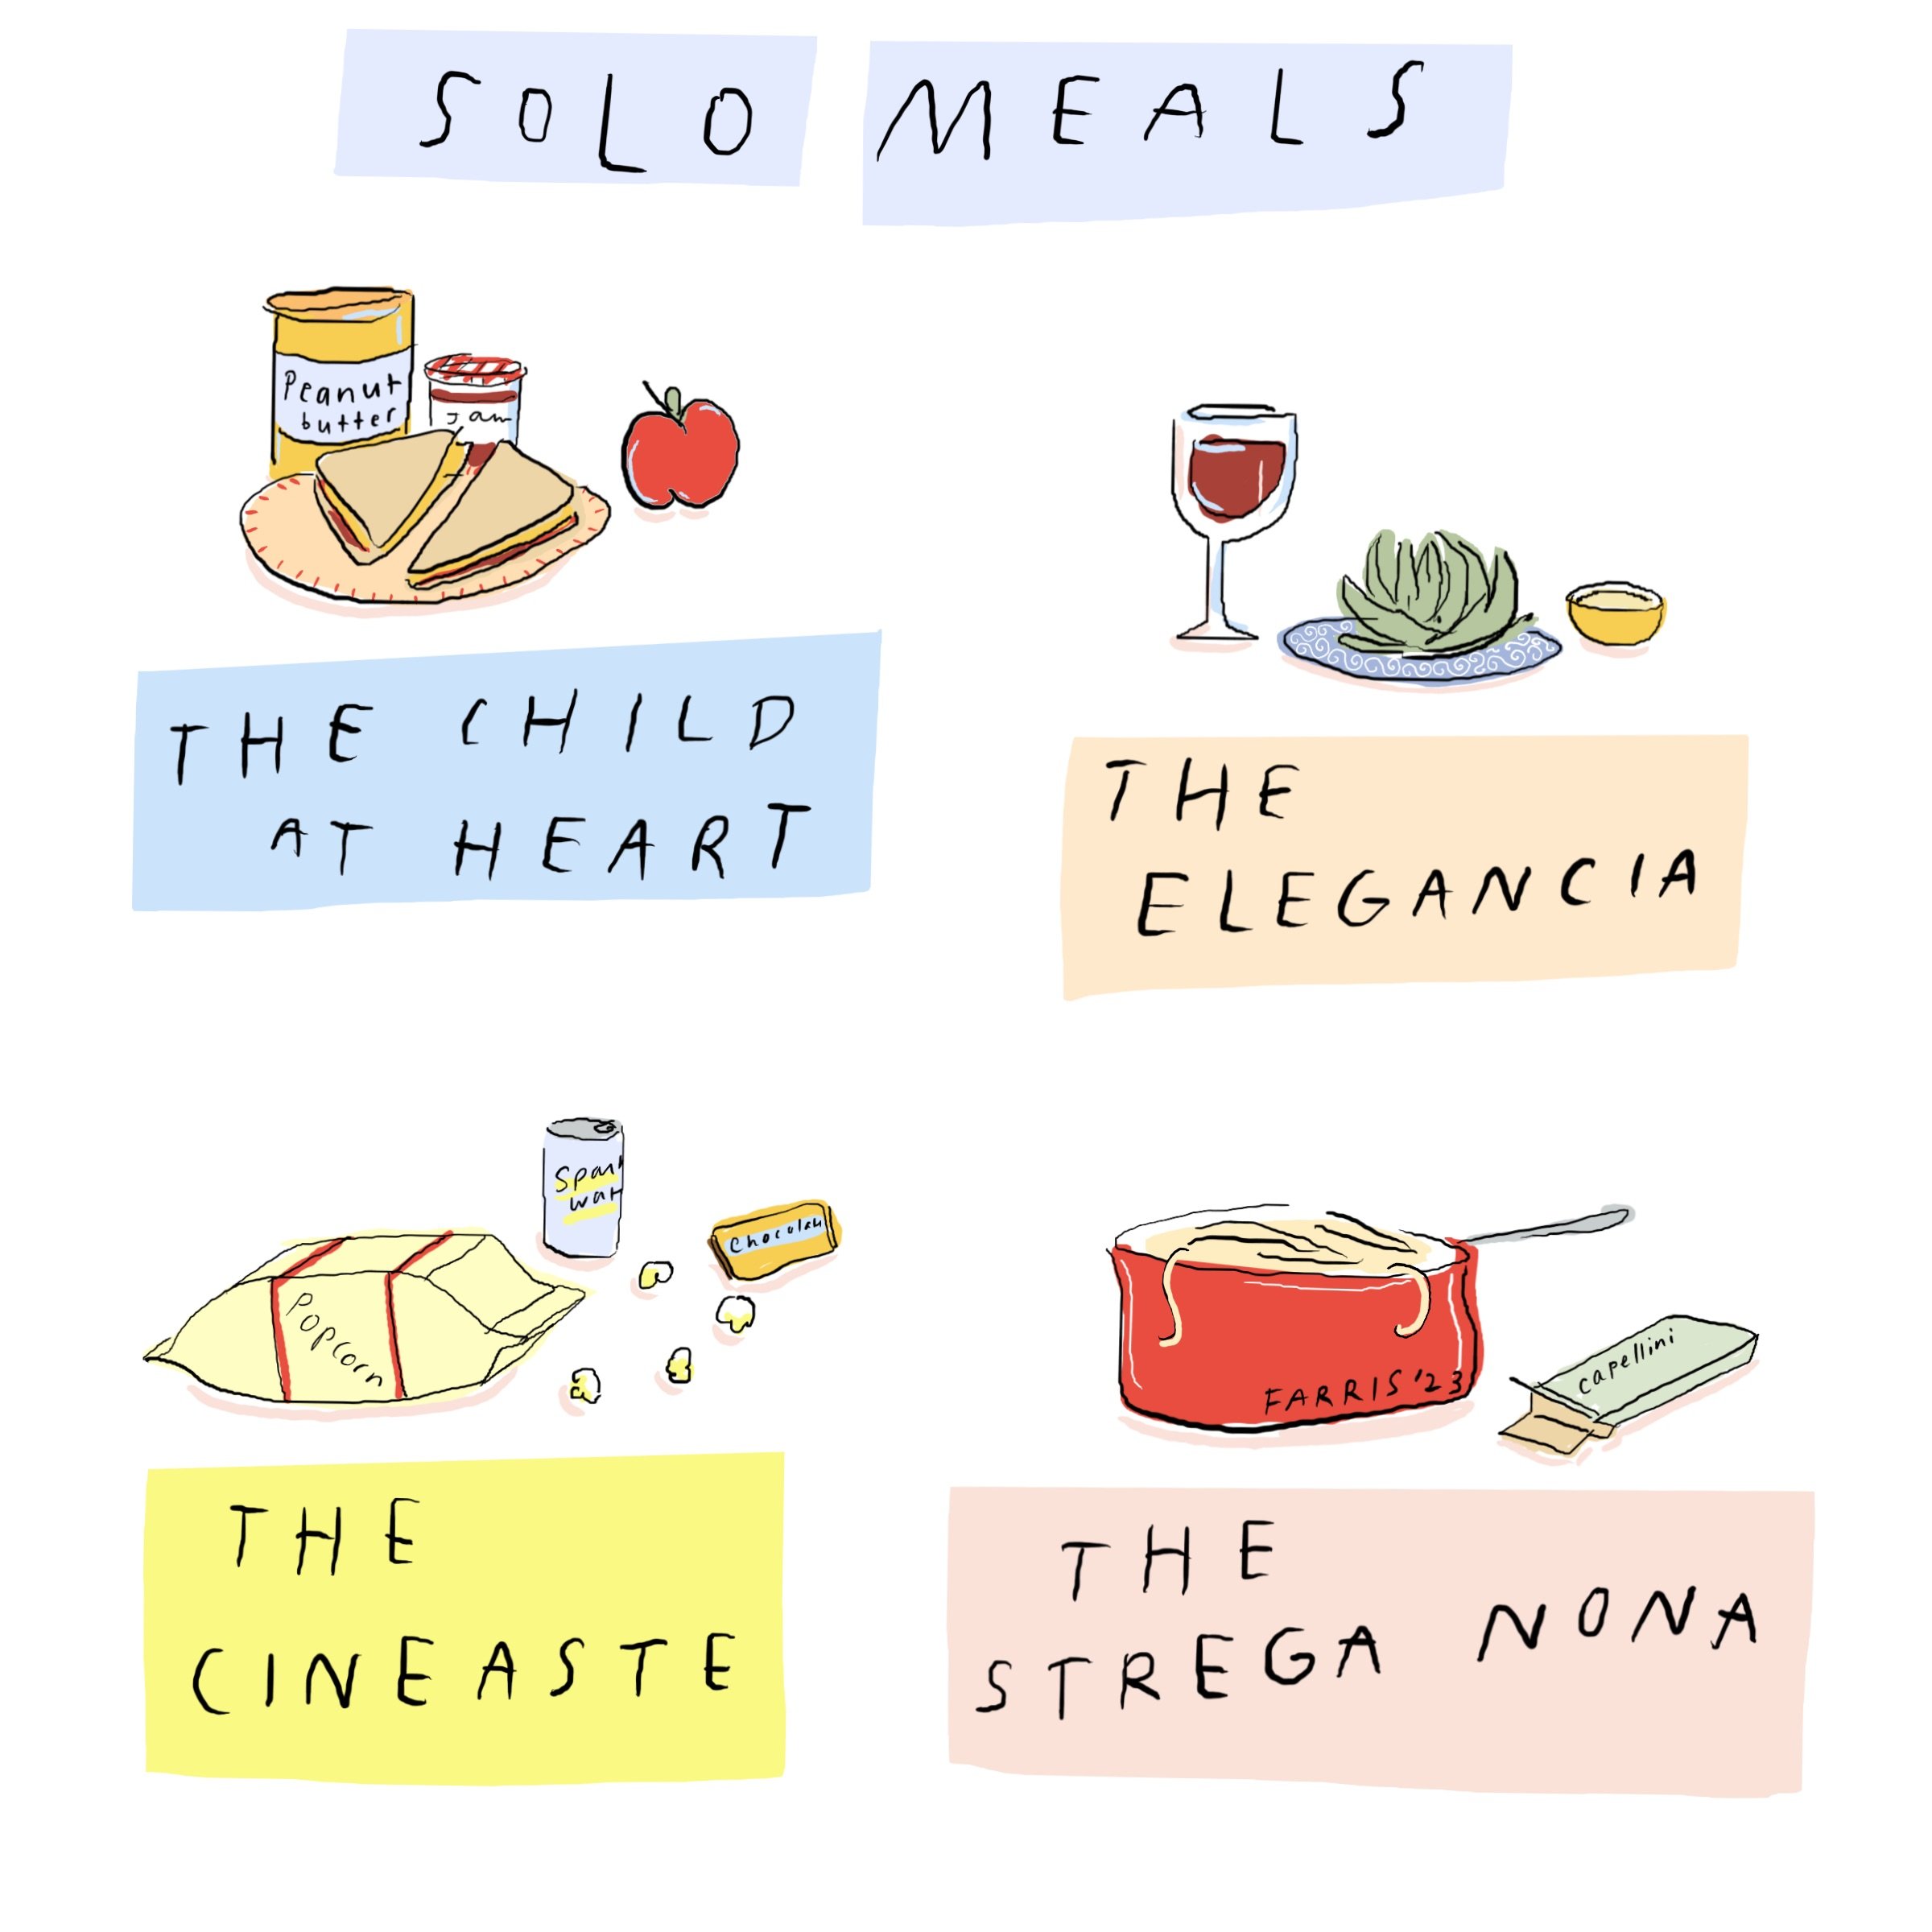 Solo Meals comic by Grace Farris